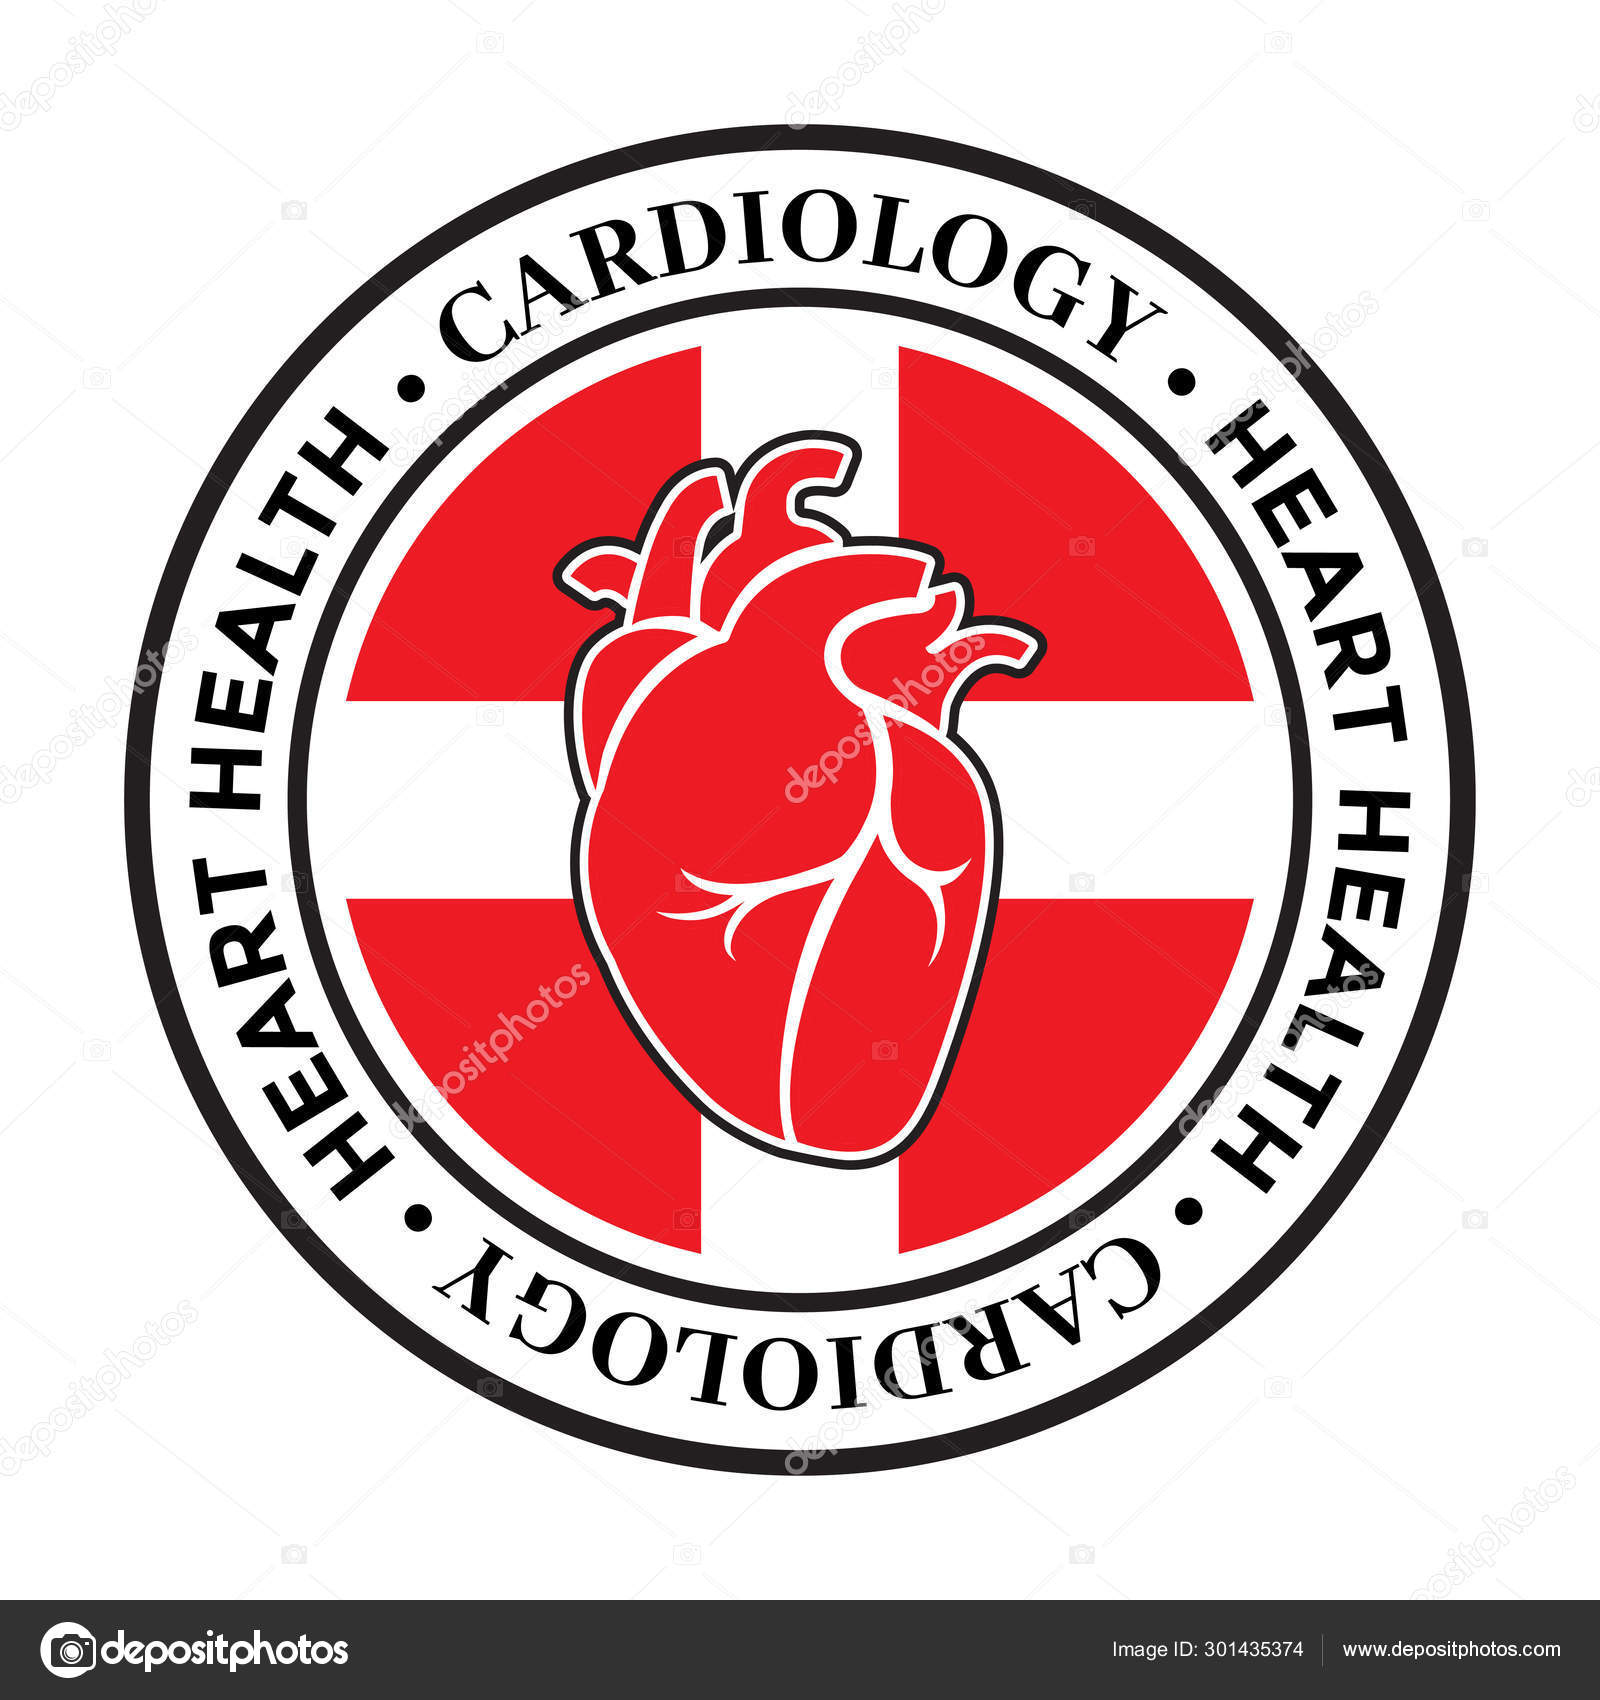 Cardiology design Free Stock Vectors